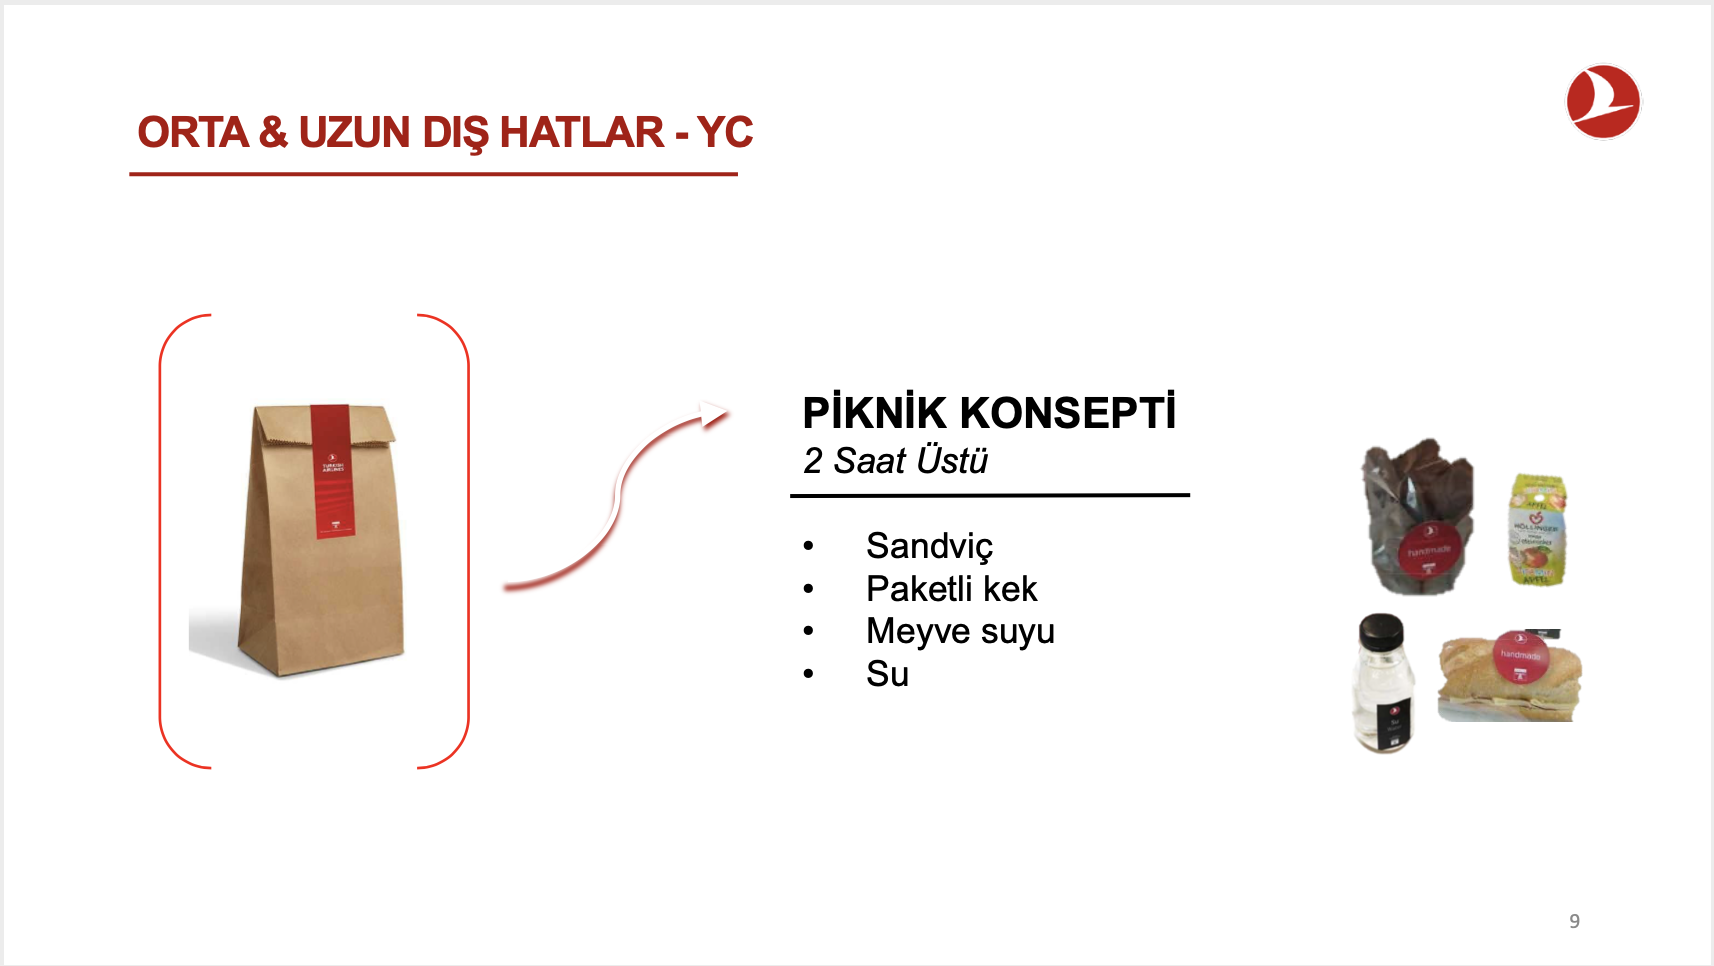 Turkish Airlines Economy Class Medium Haul Snack Bag